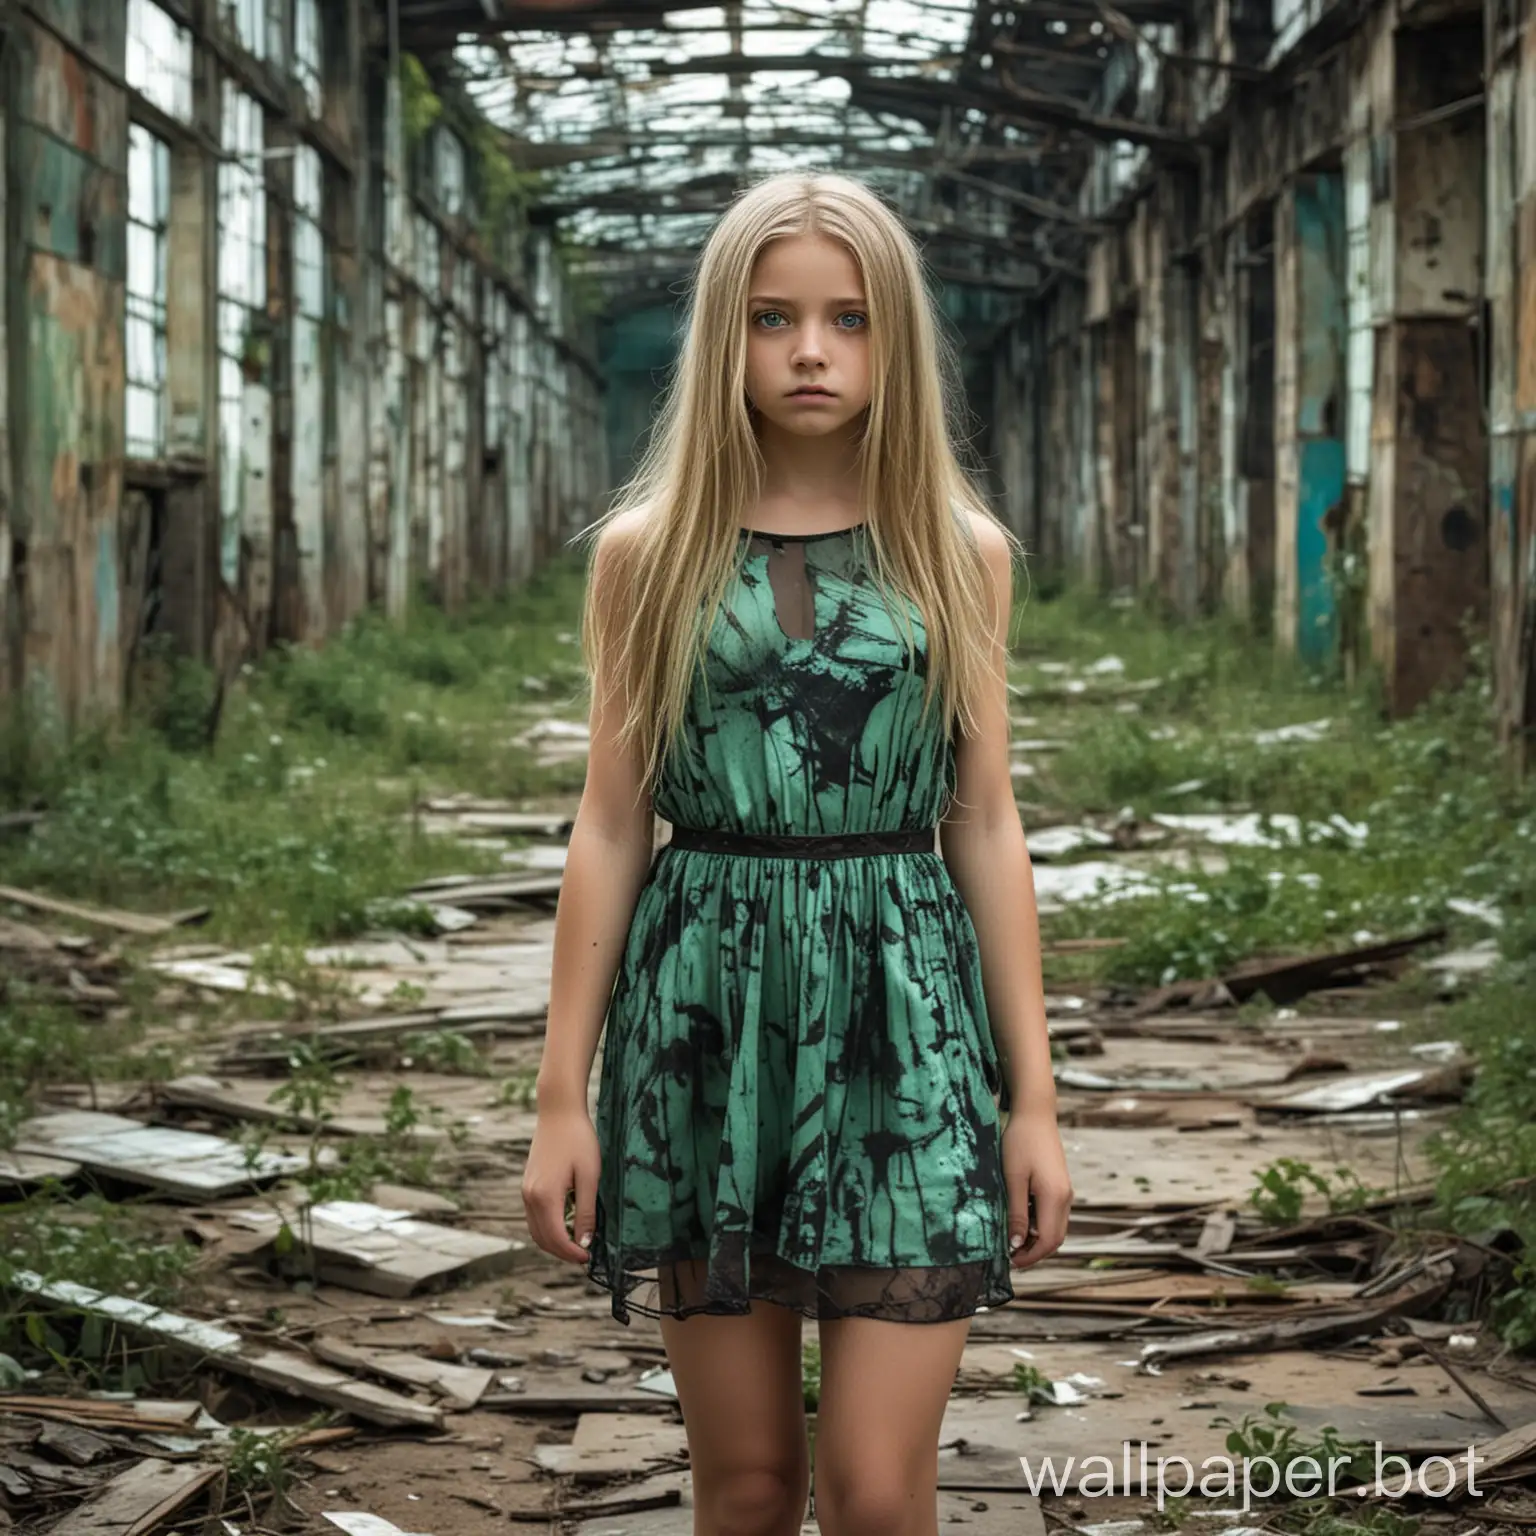 Desperate-Beautiful-Girl-in-SemiTransparent-Dress-Amid-Abandoned-Futuristic-Landscape